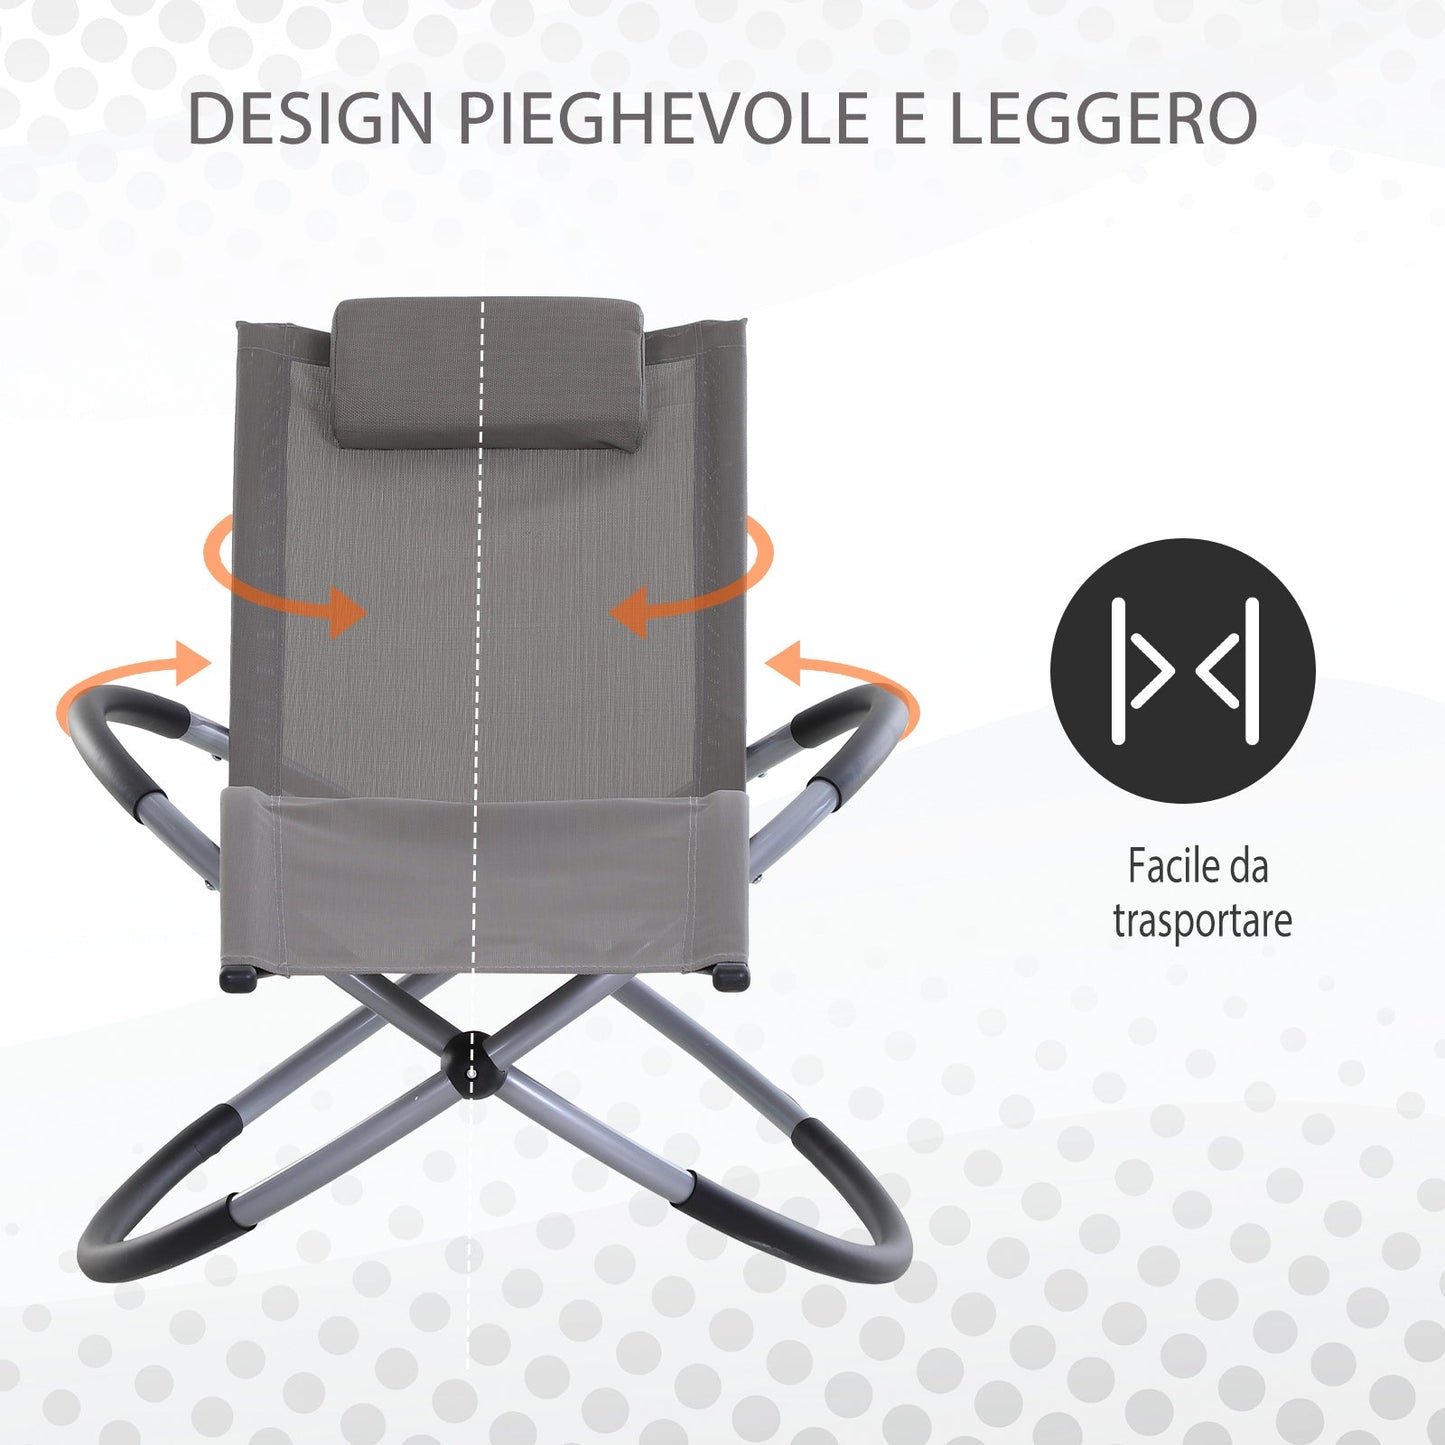 Outsunny rocking chair in Texilene Zero-Gravity Grigio 154x80x84cm